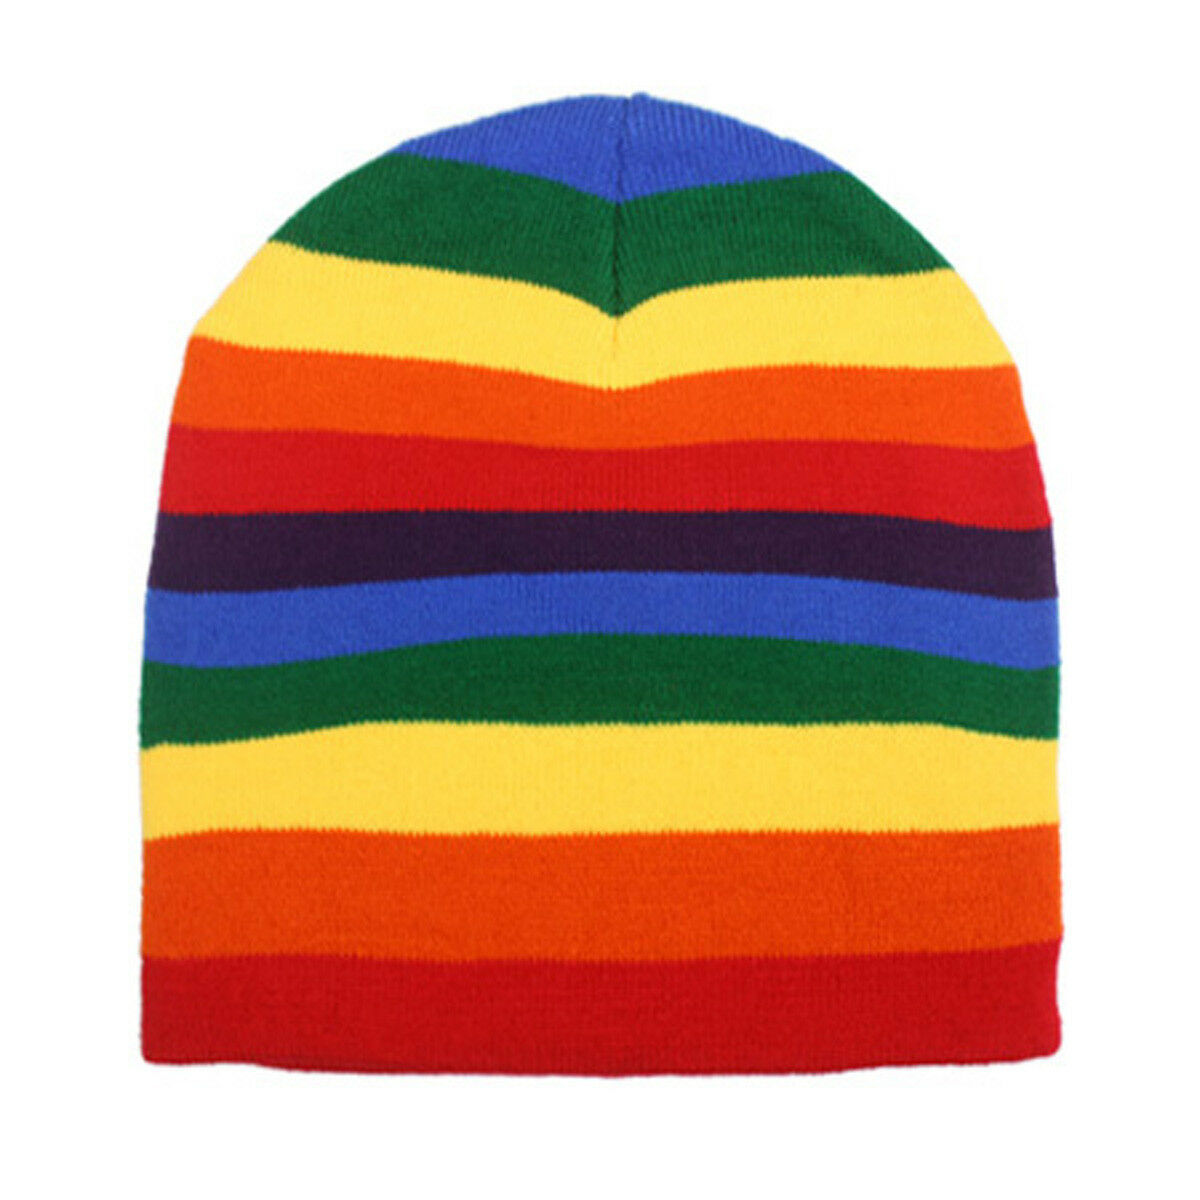 Rainbow Beanie Hat - Colorful Soft Warm Daily Headwear Cap